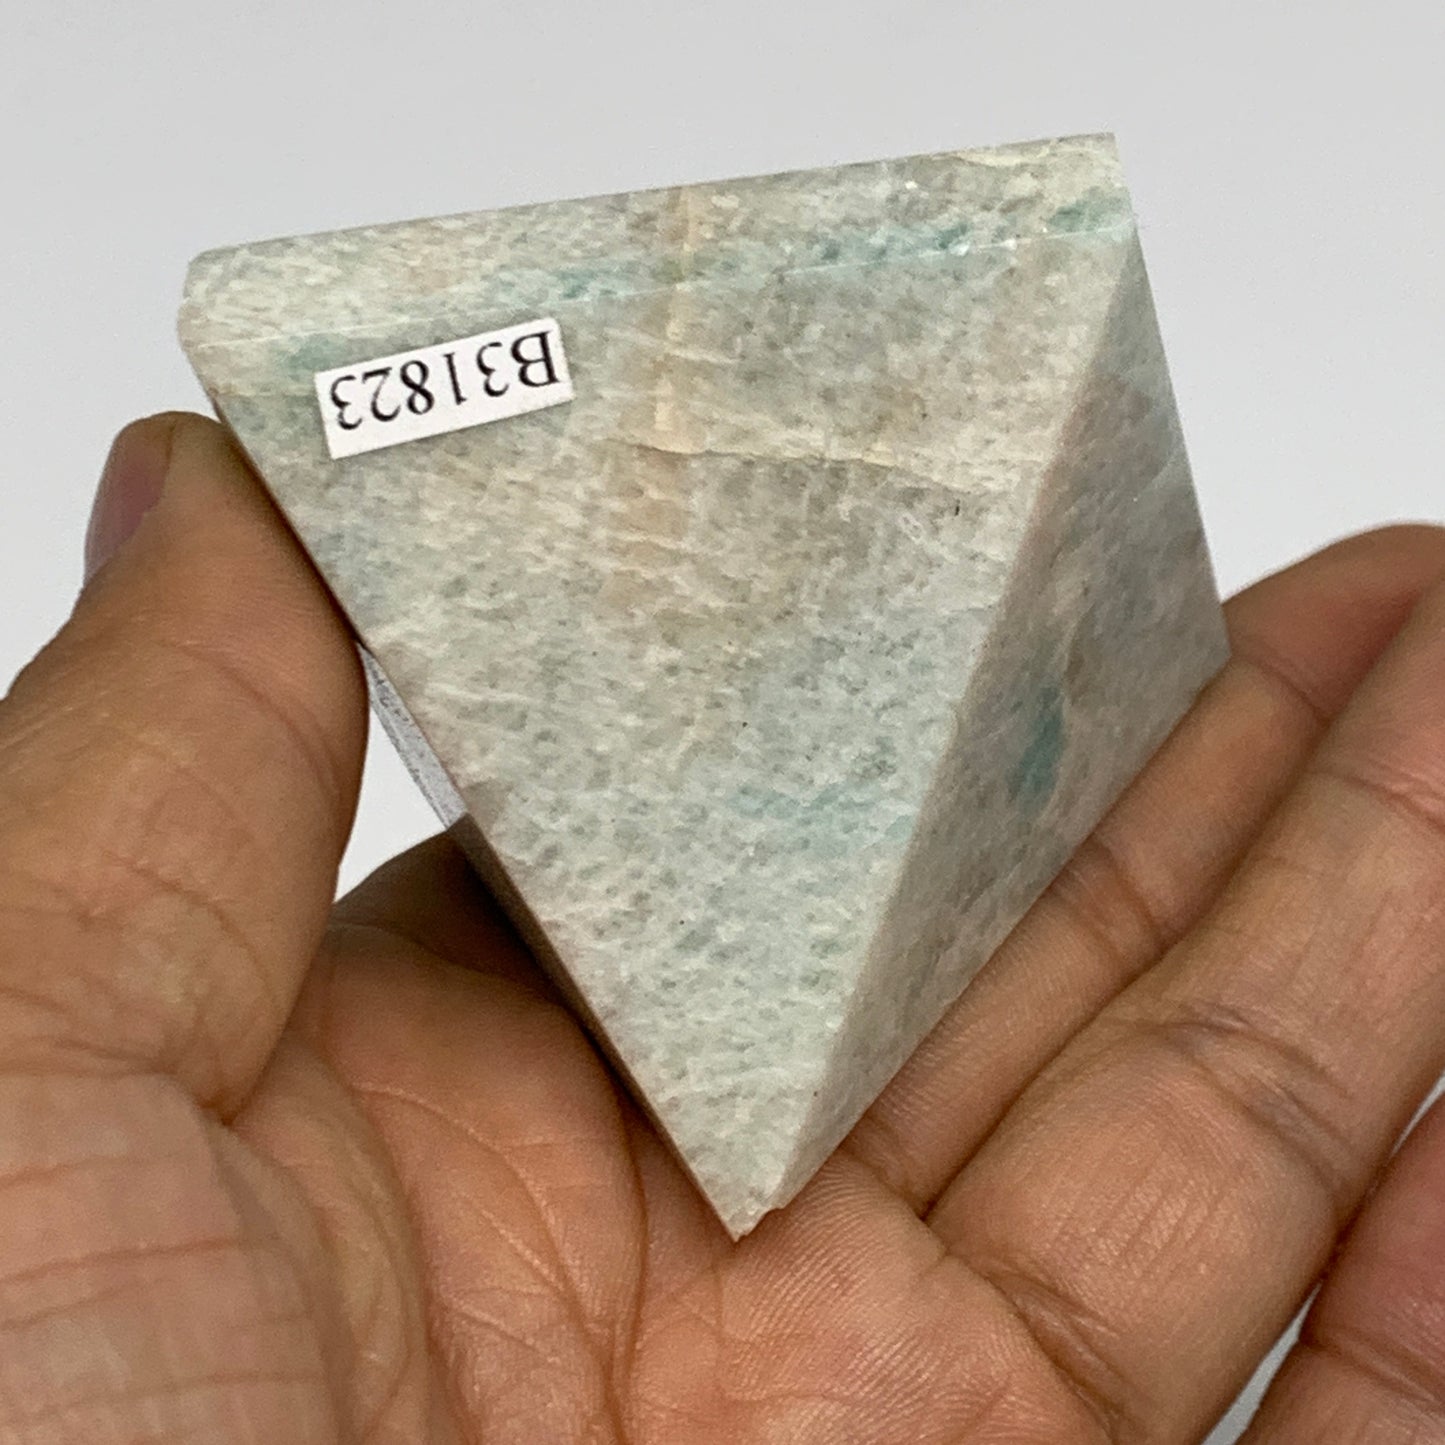 130.6g, 1.9"x2"x1.9", Amazonite Pyramid Gemstone, Decorative Stone, B31823